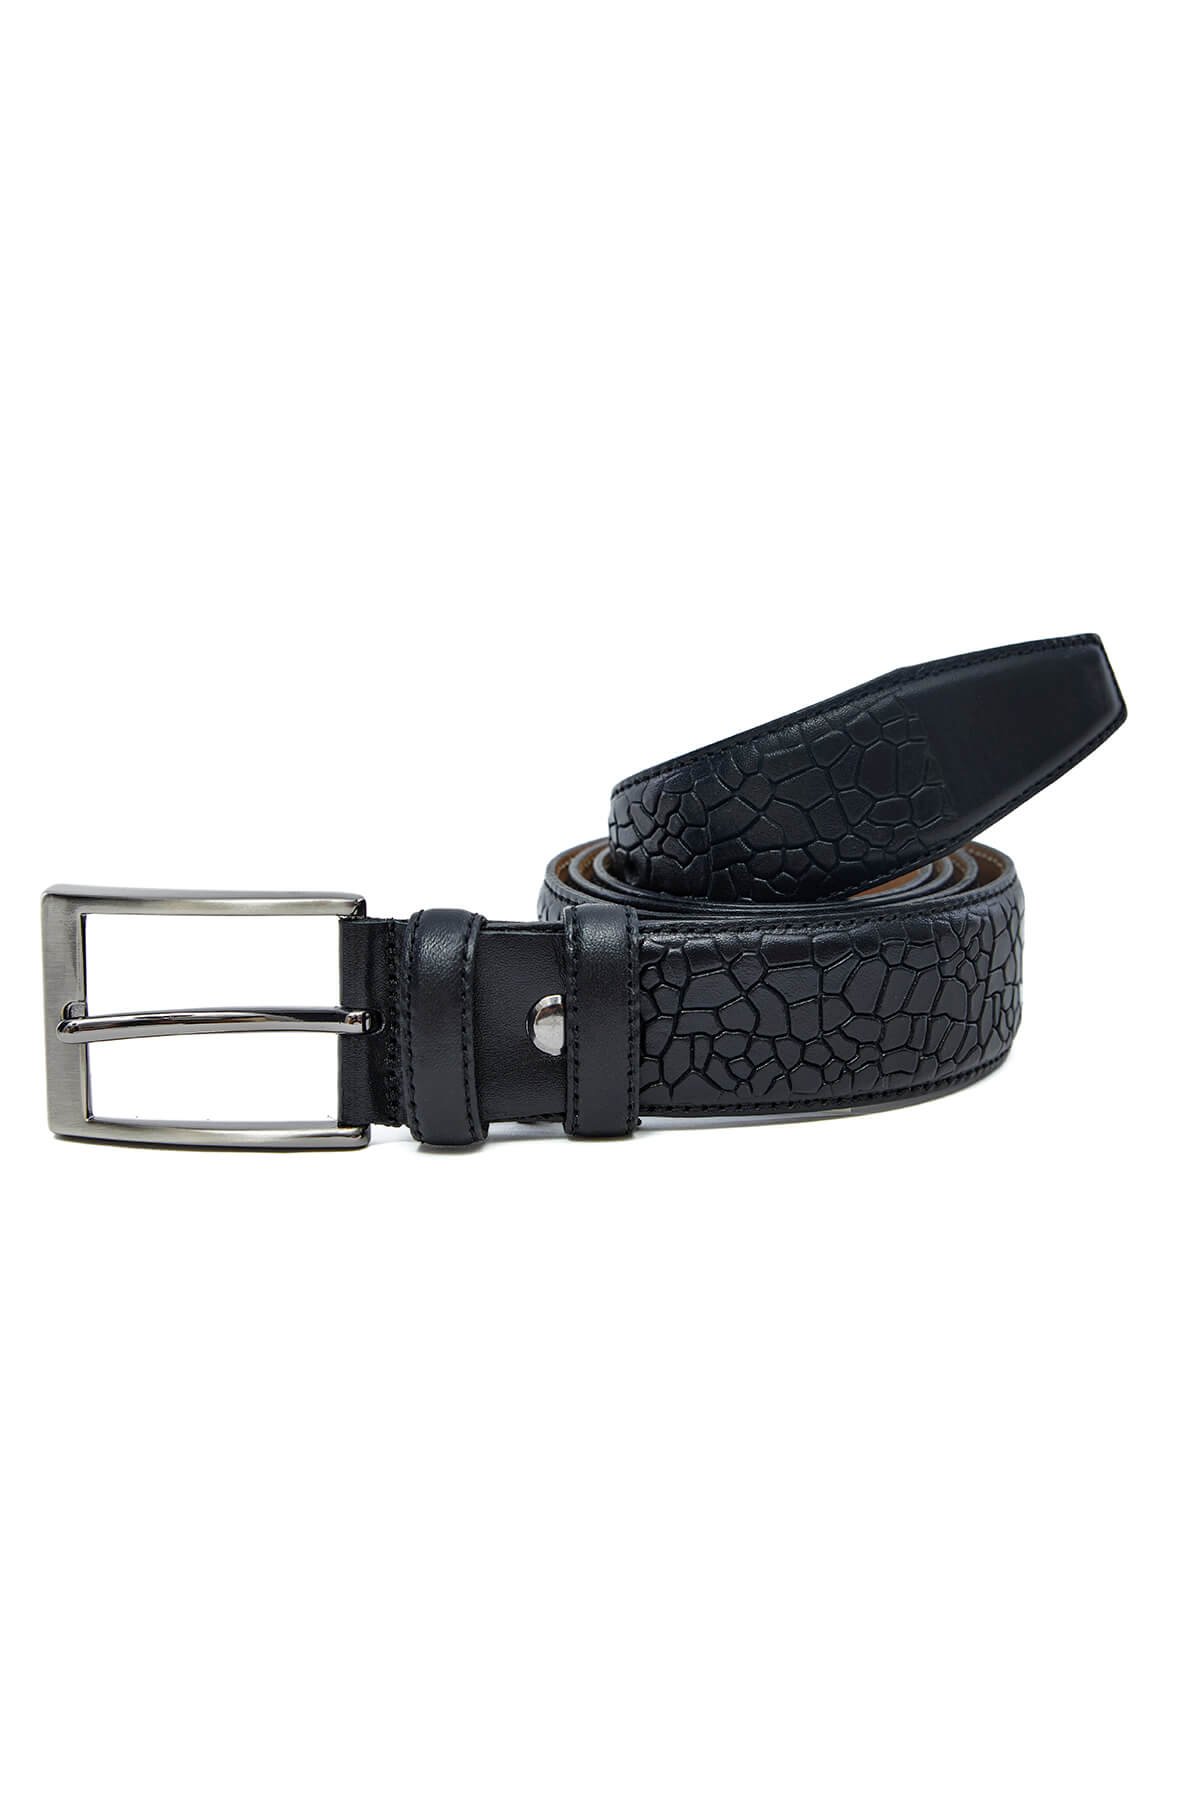 Patterned Genuine Classic Leather Belt Black